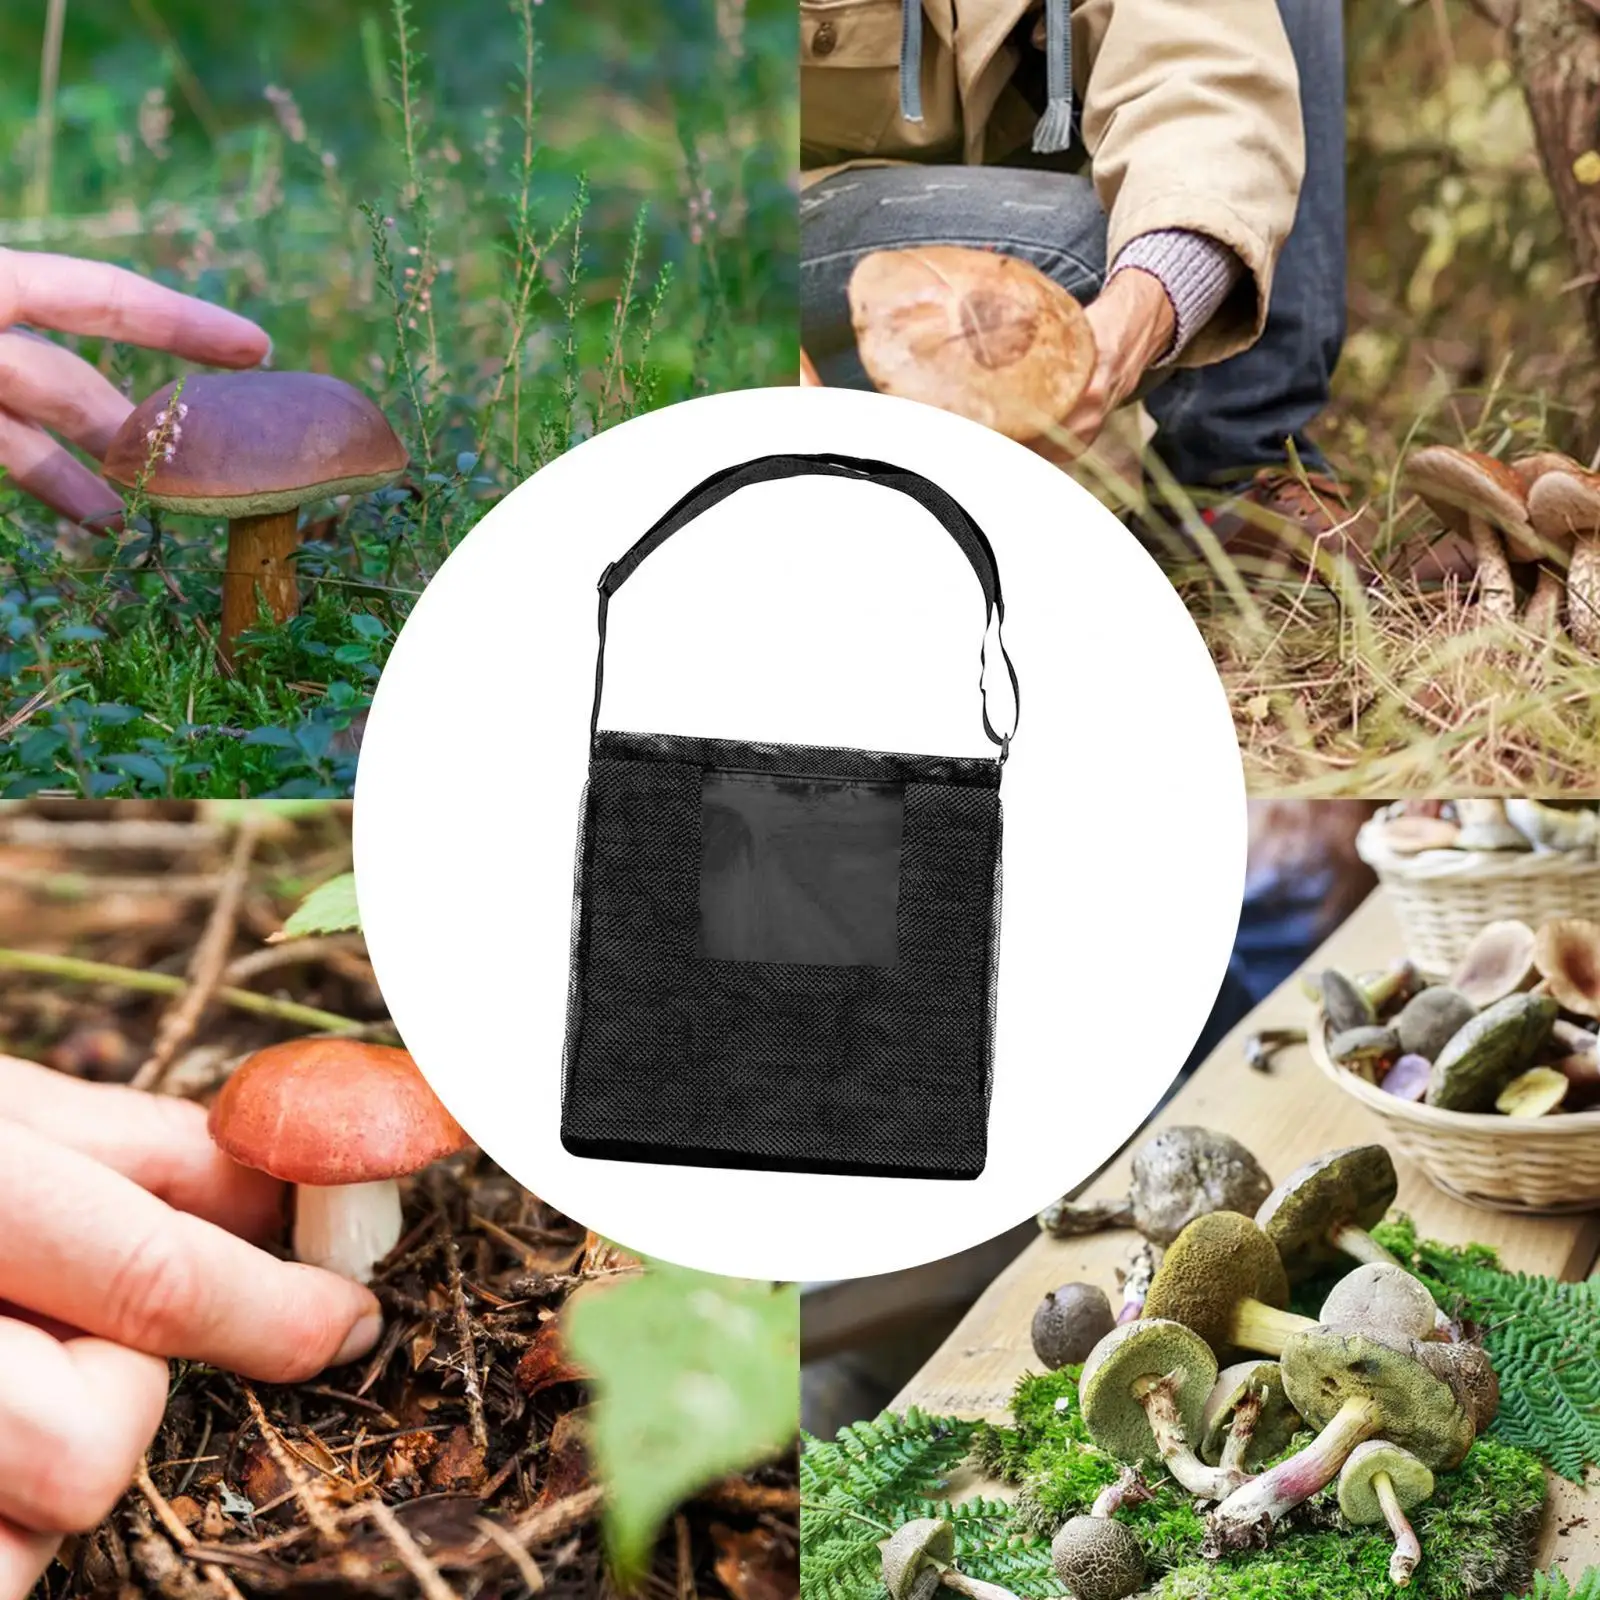 Reusable Grocery Bag with Convient Pocket 43x43cm Harvest Shoulder Bag for Outdoor, Camping, Garden, Adventure Fanatics Hiking